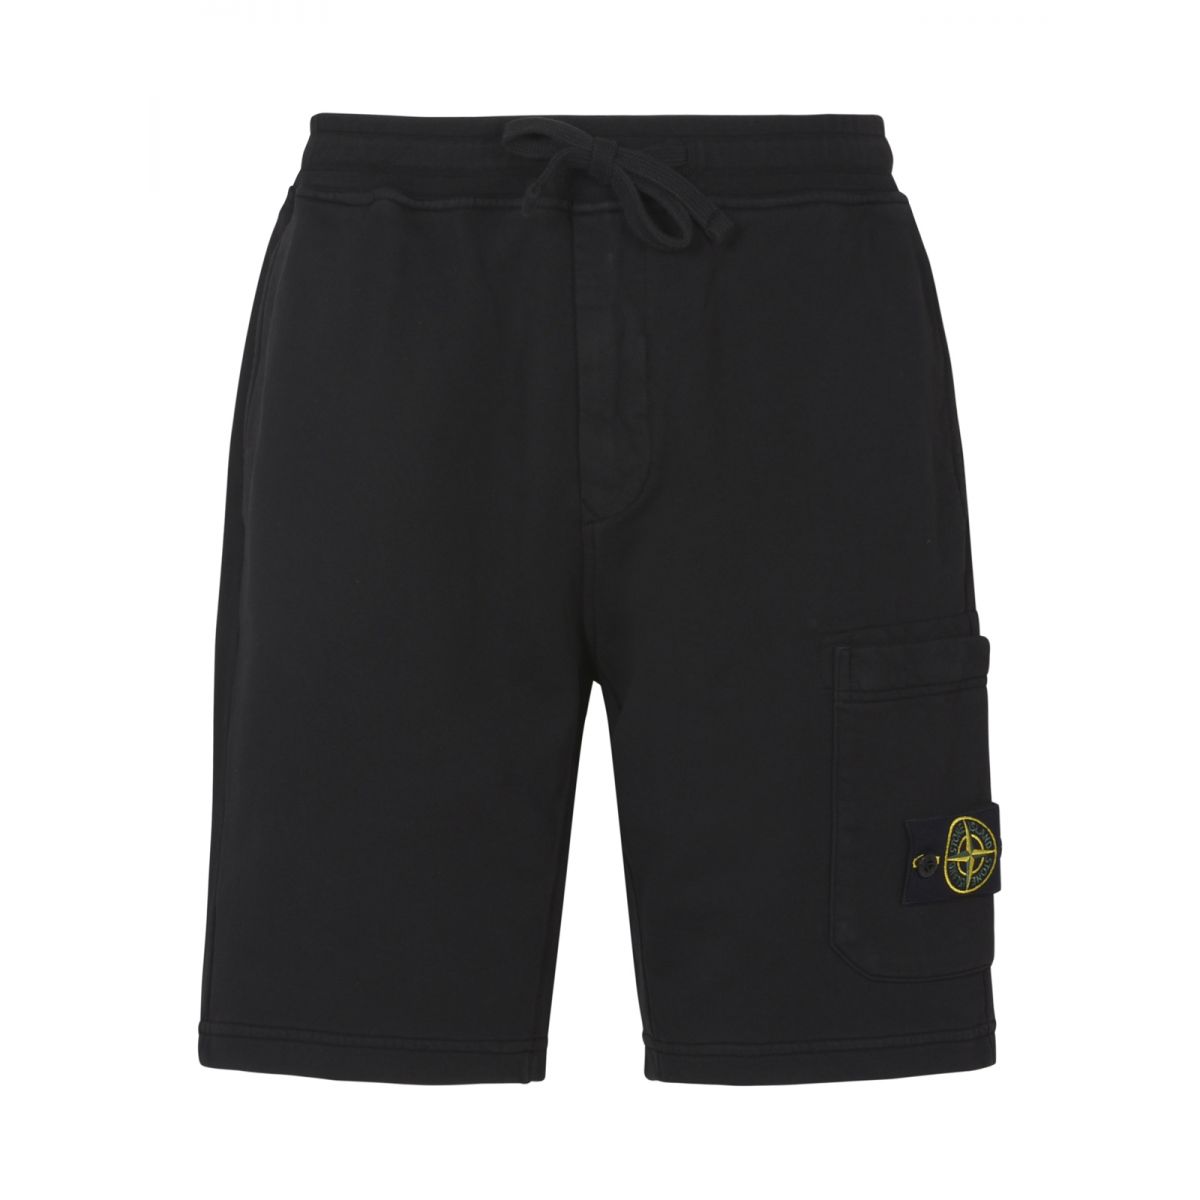 STONE ISLAND - Shorts de felpa con parche del logo